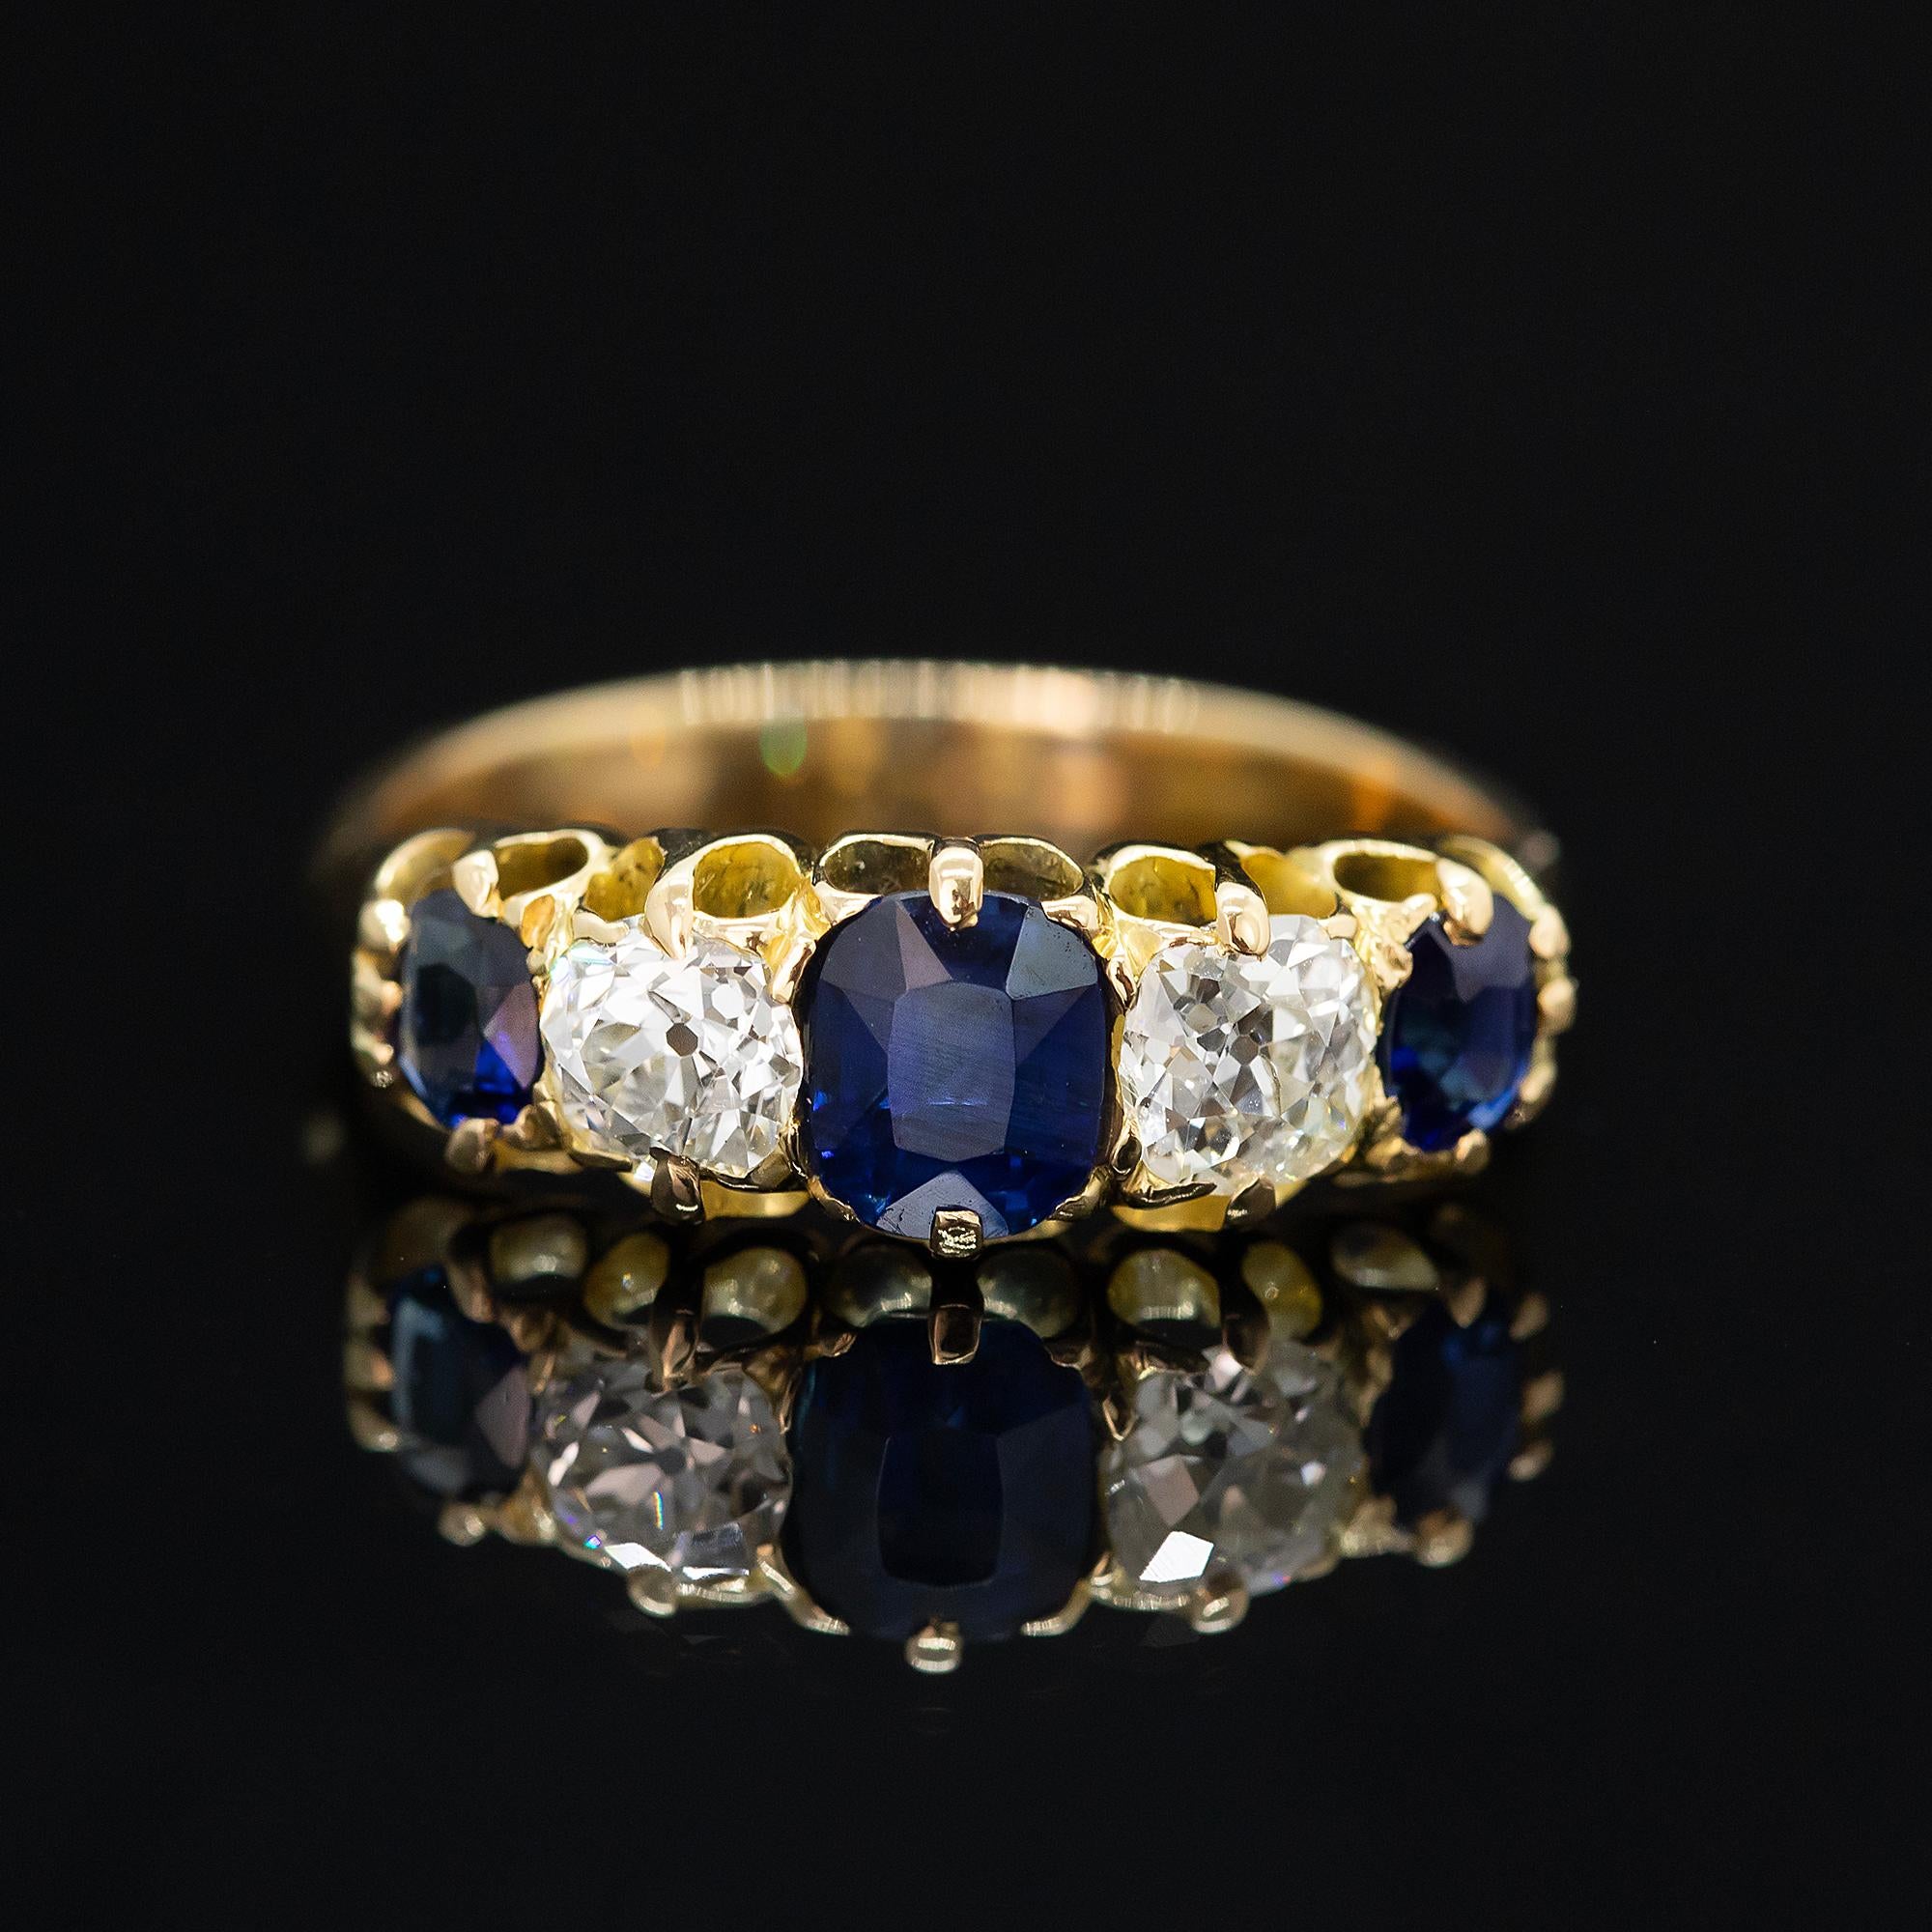 Mixed Cut Edwardian Sapphire & Diamond Half Hoop Ring Circa 1900s For Sale